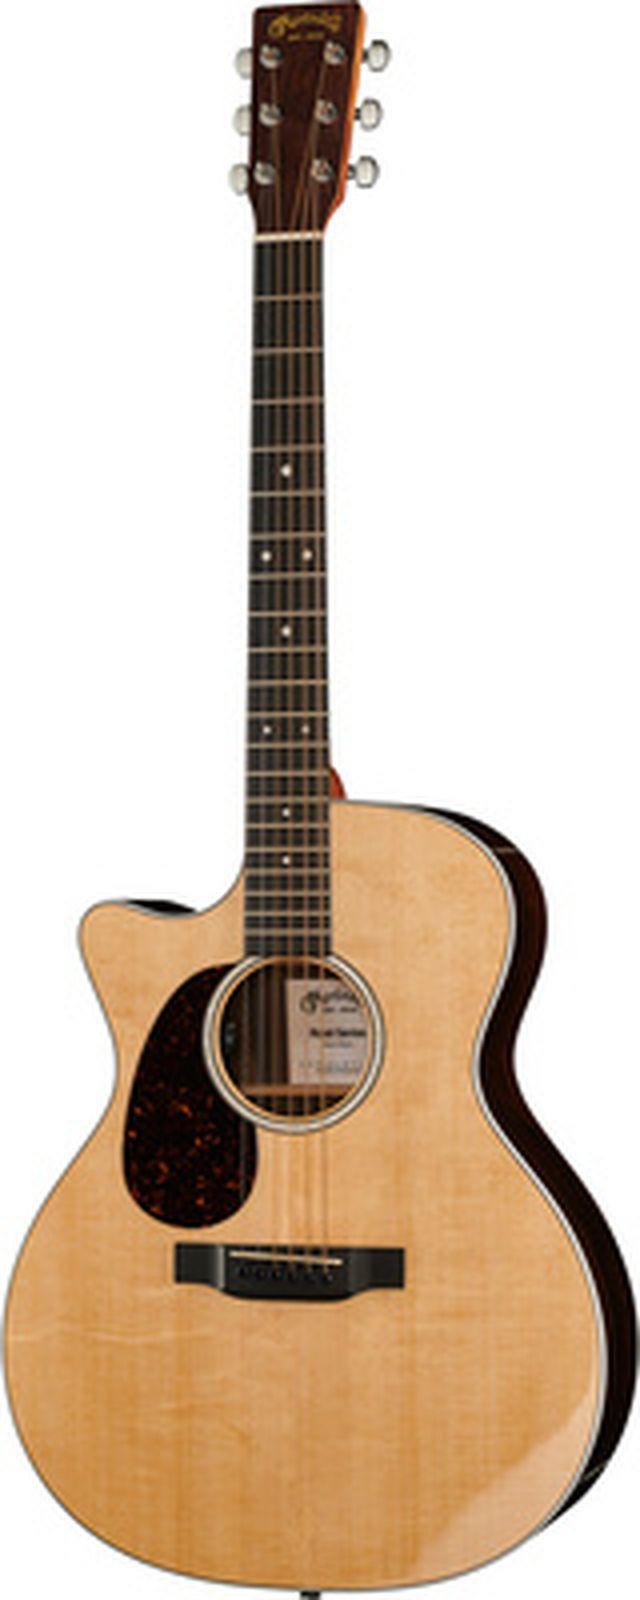 Martin Guitars GPC-13EL-01 Ziricote L B-Stock